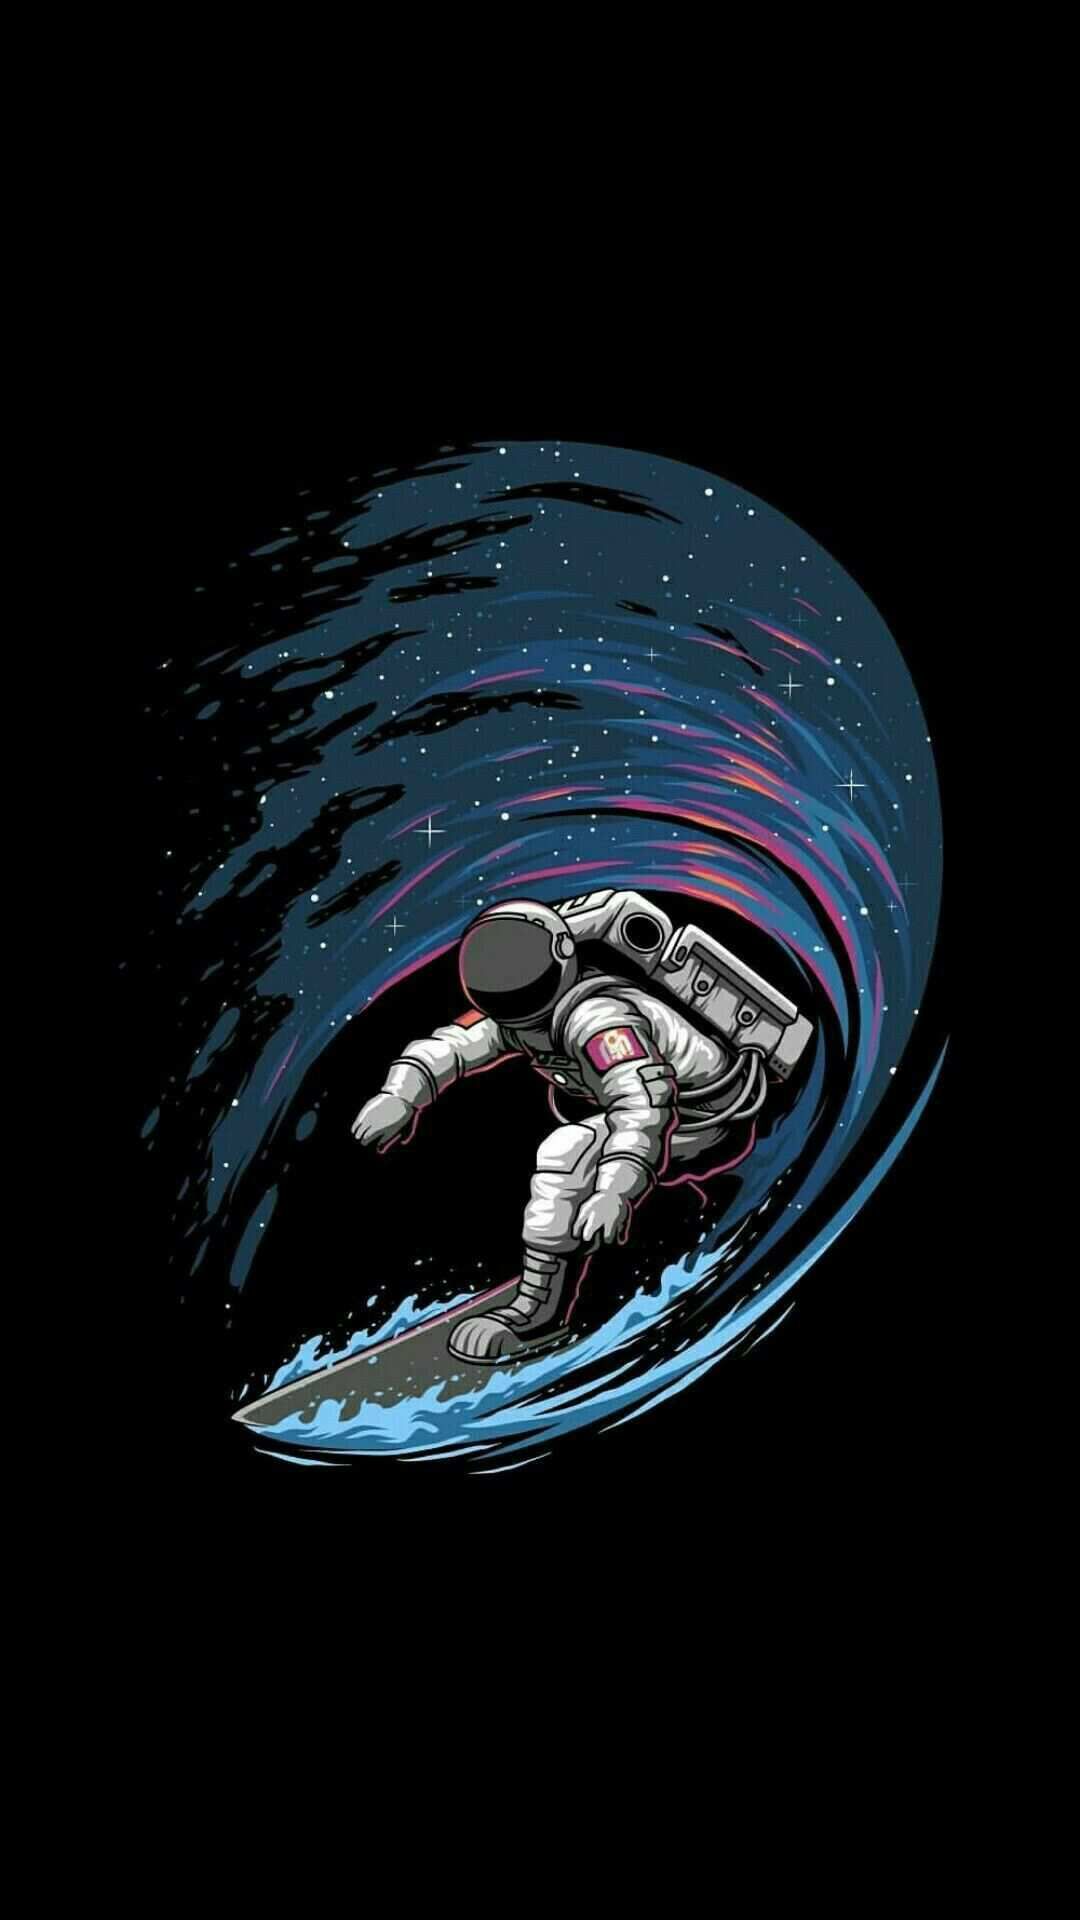 Astronaut wallpaper, Space iphone wallpaper.com